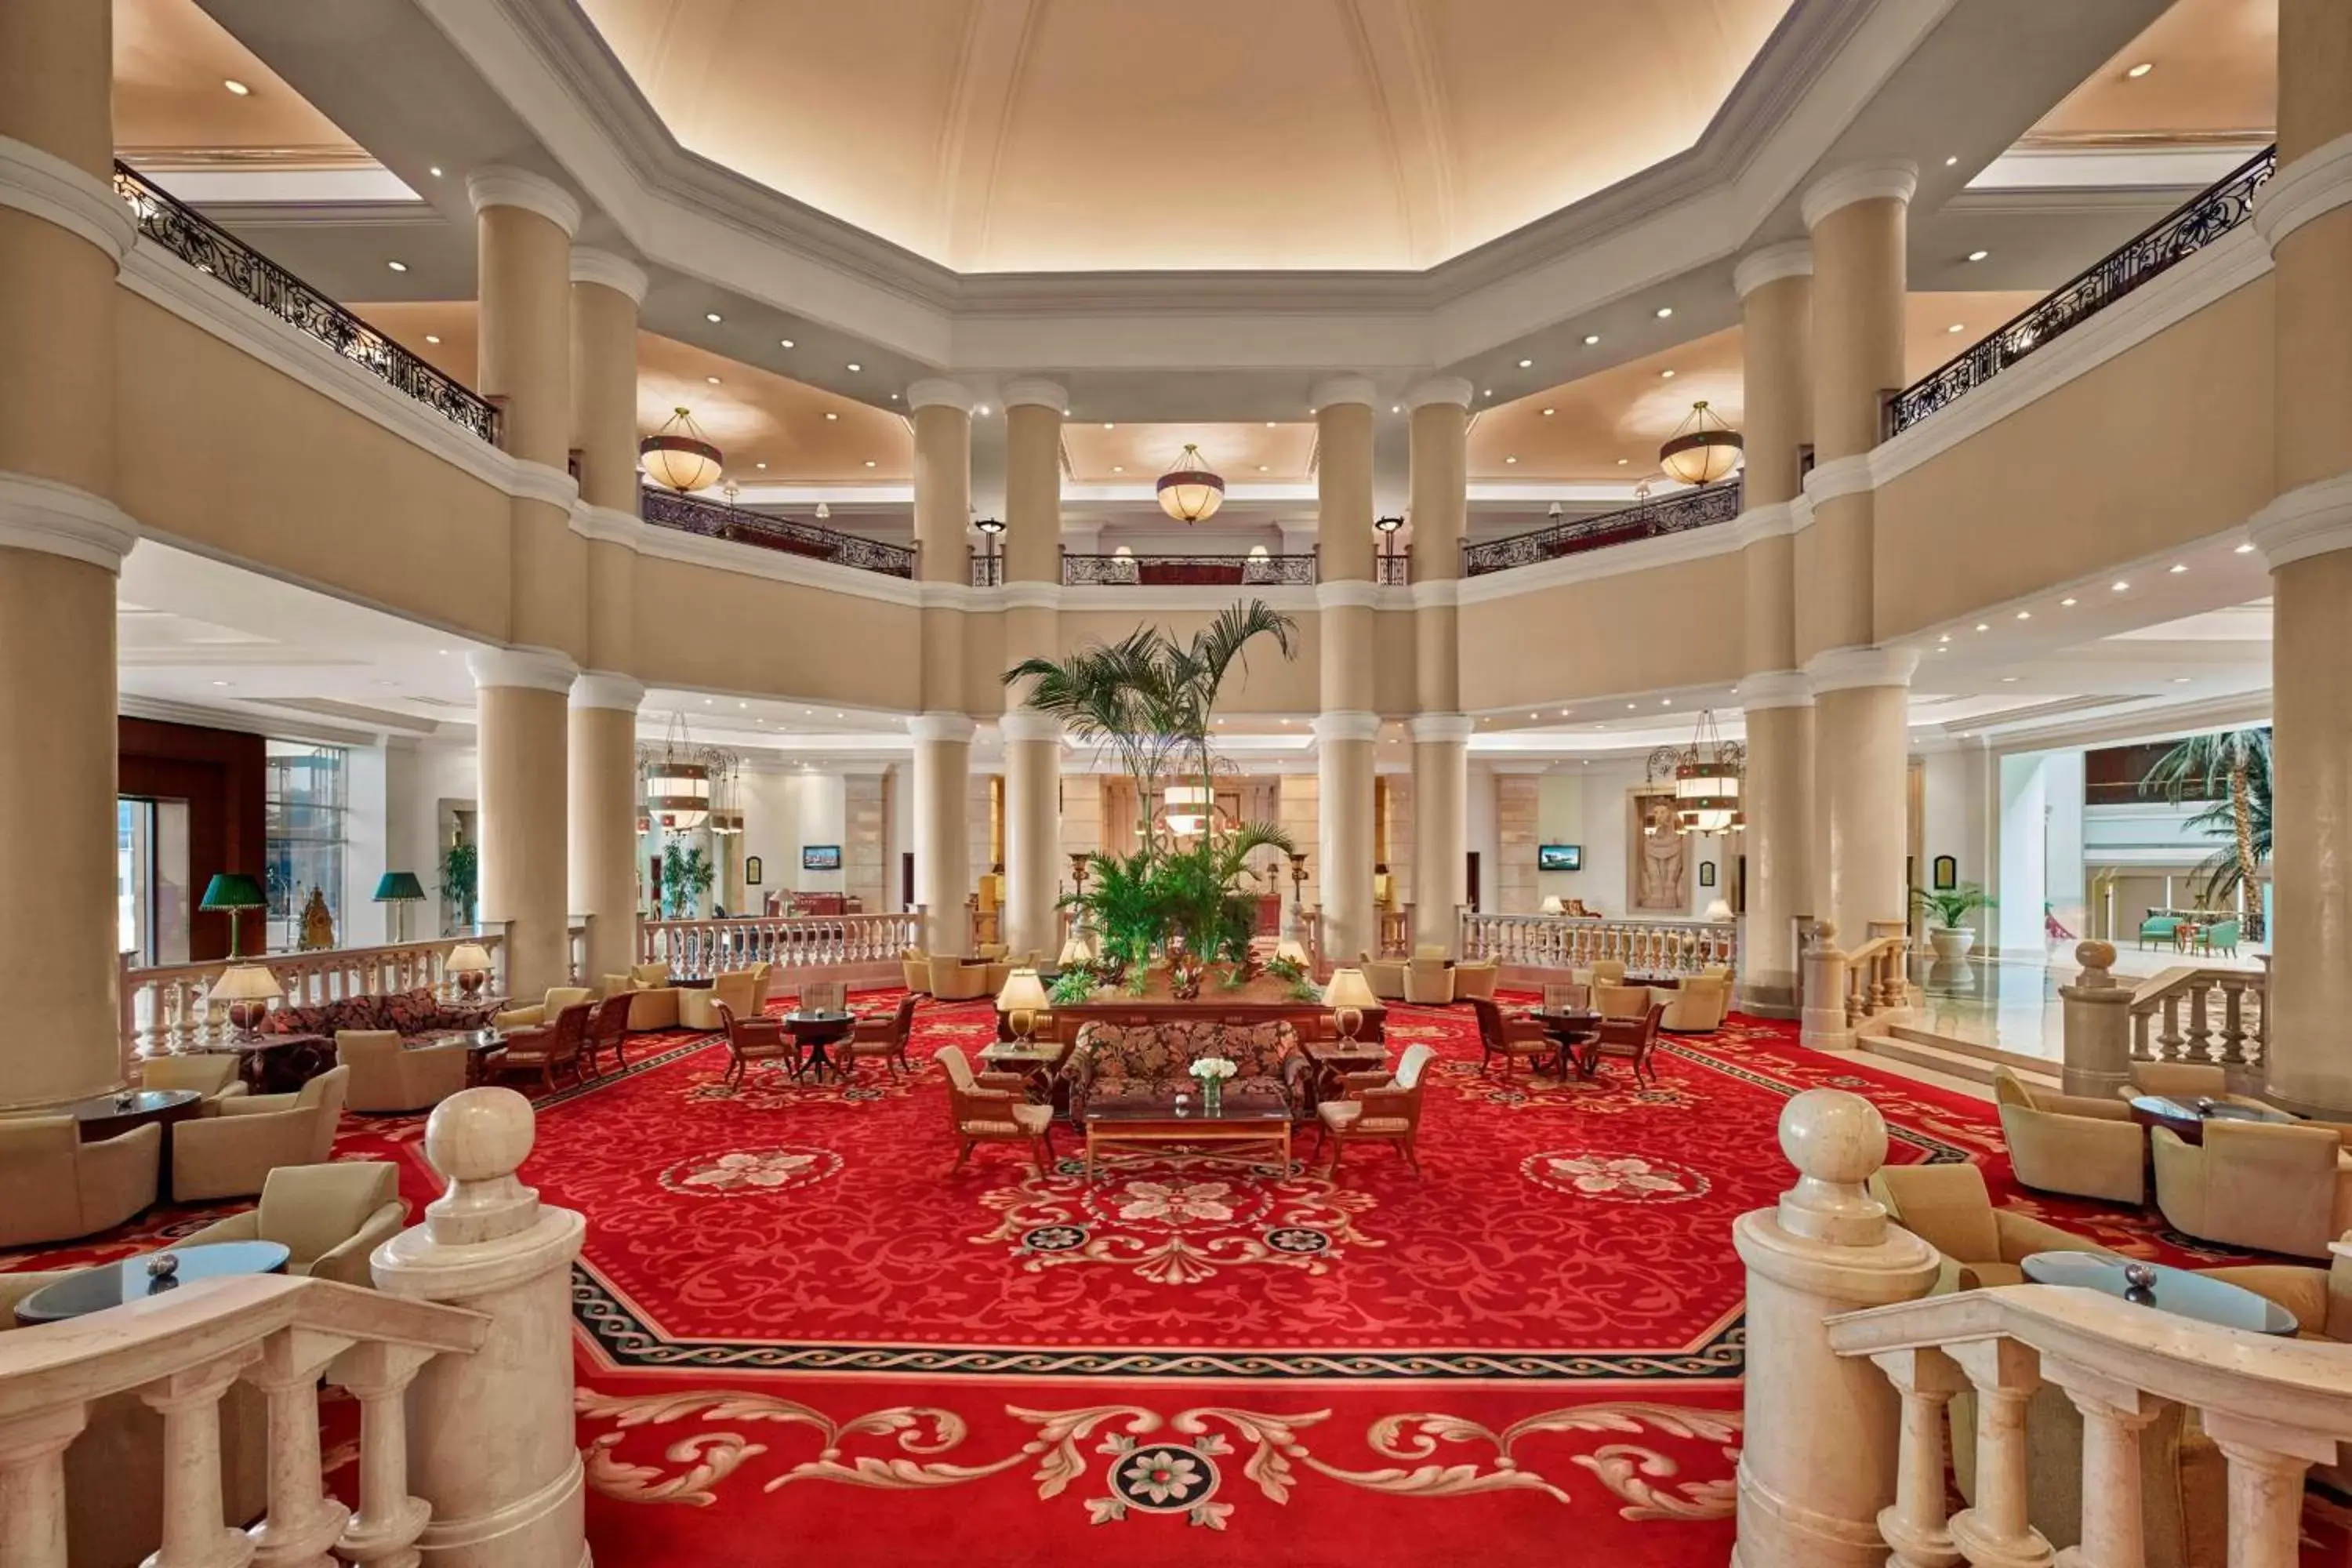 Lobby or reception in JW Marriott Hotel Cairo